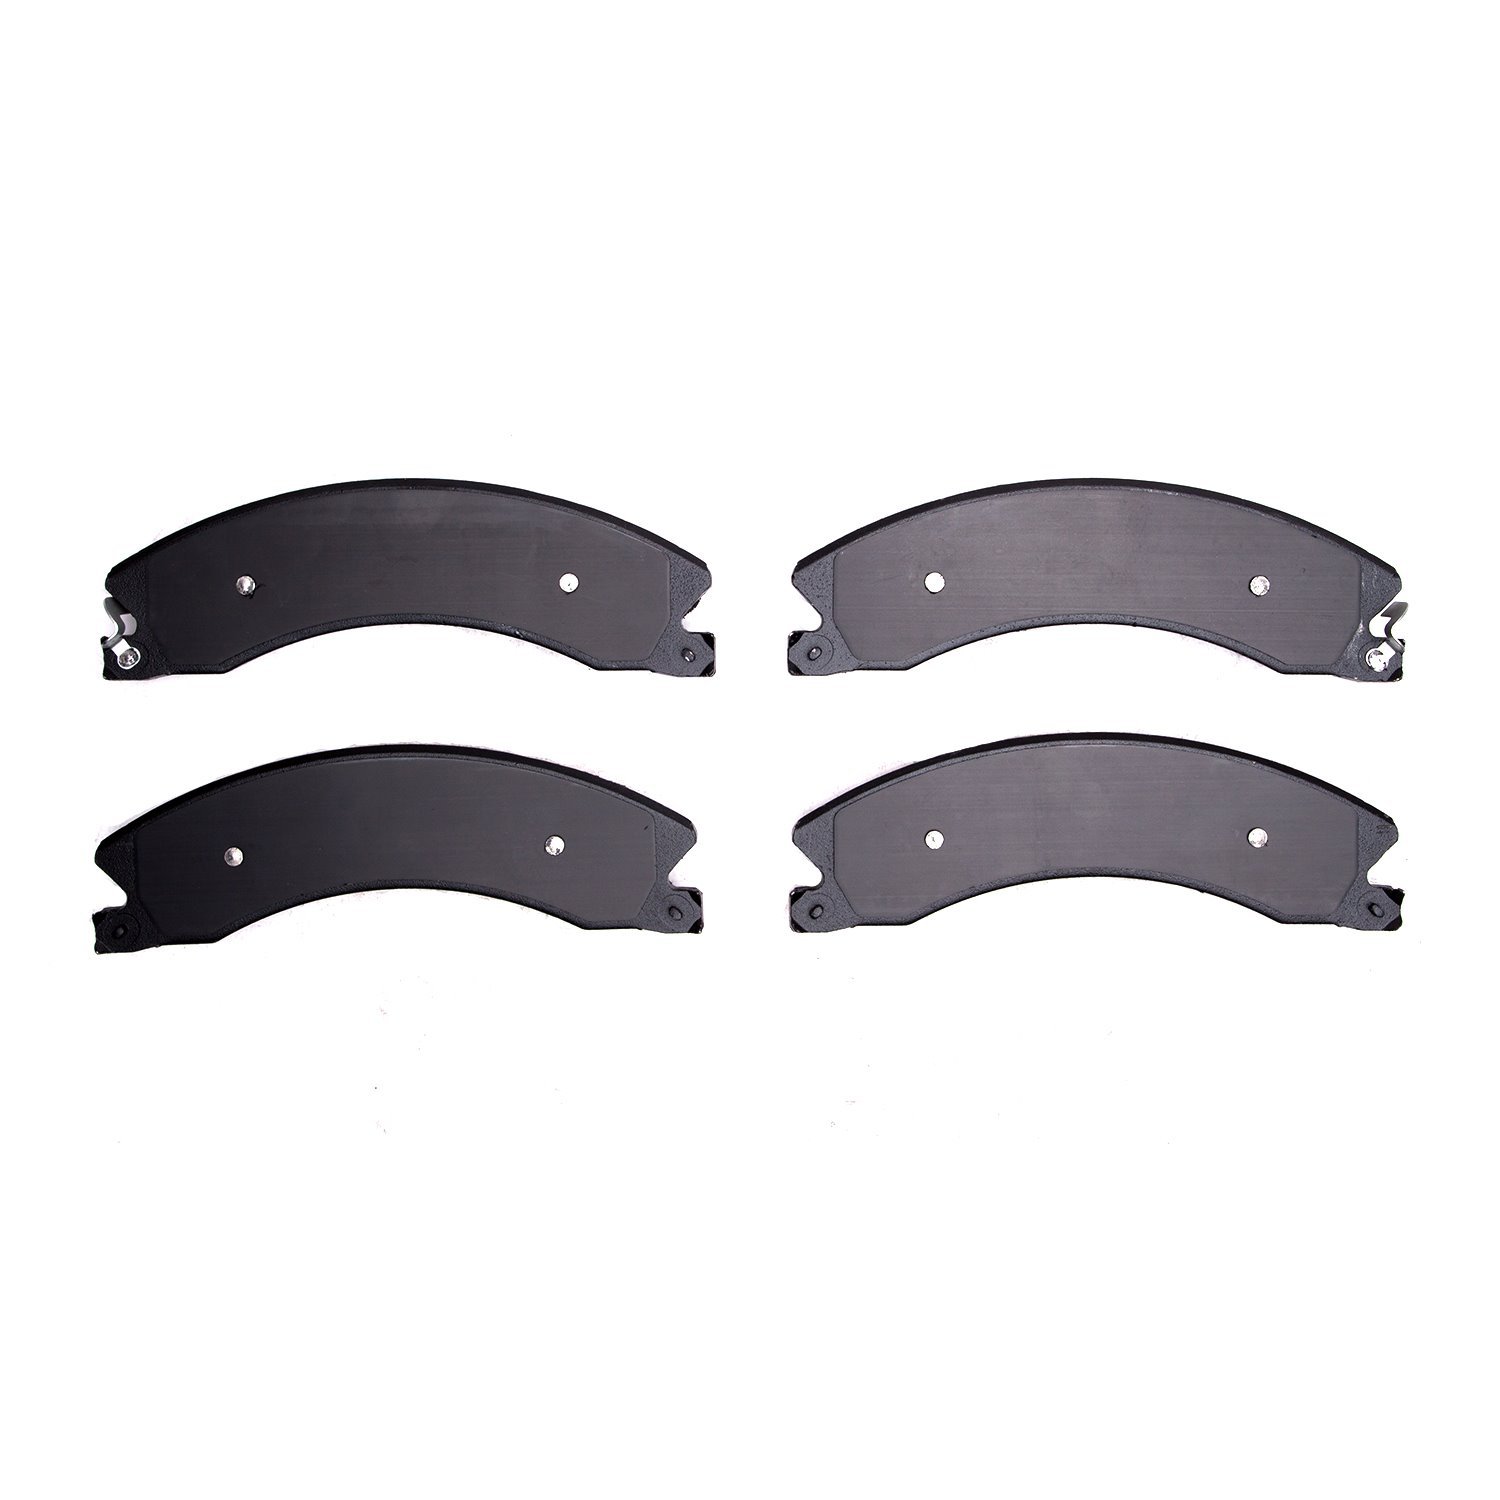 1310-1565-00 3000-Series Ceramic Brake Pads, Fits Select Multiple Makes/Models, Position: Fr,Front,Rear,Rr